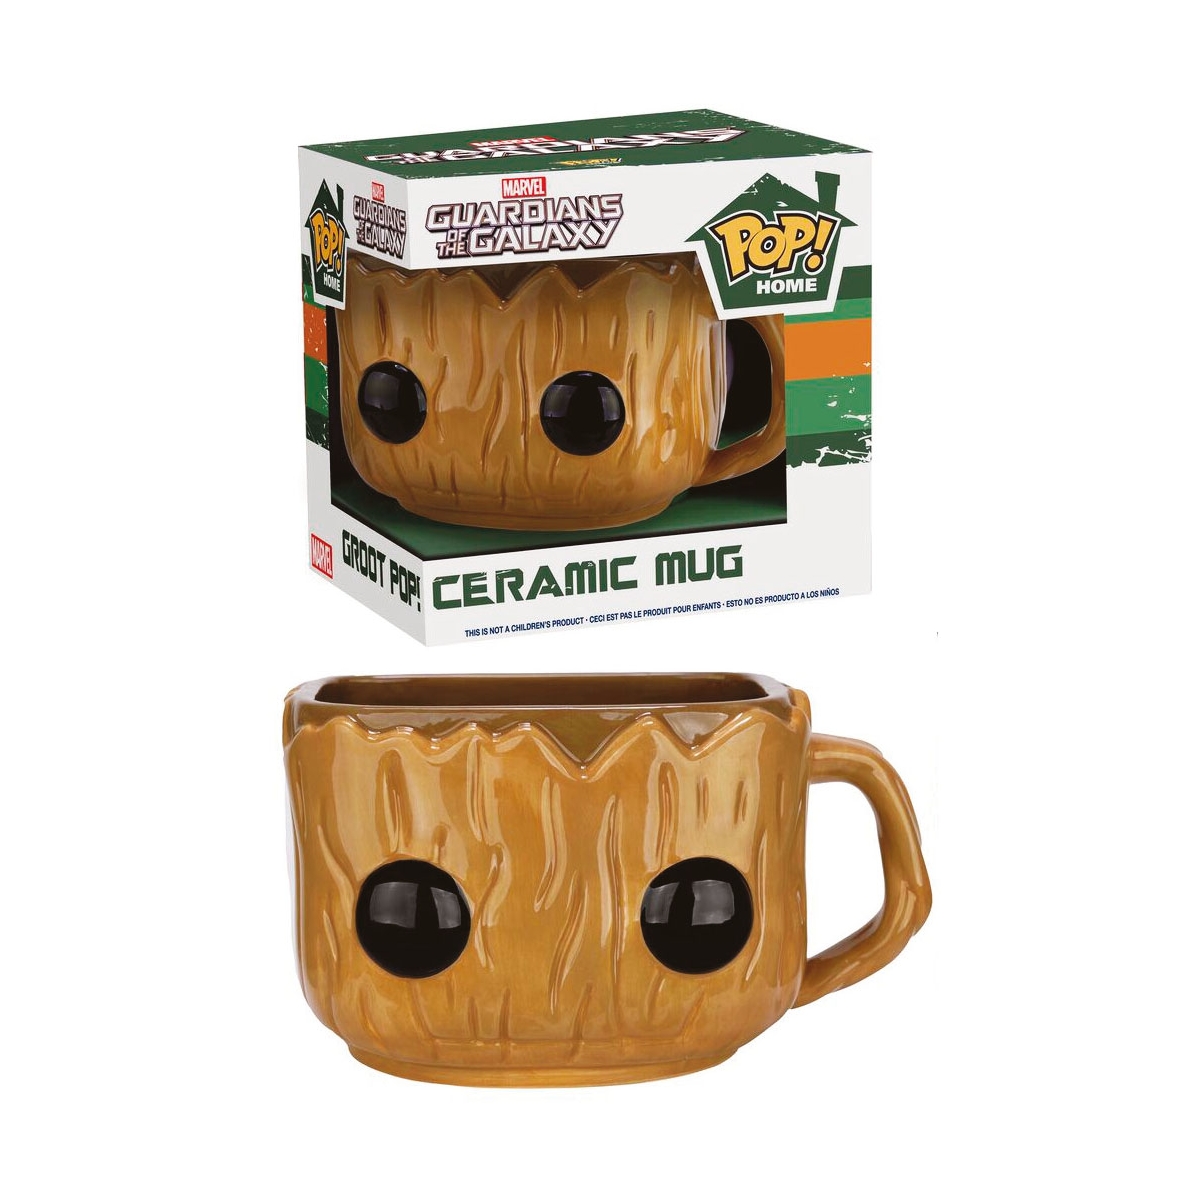 Les Gardiens de la Galaxie - Mug POP! Home Groot - Figurine-Discount